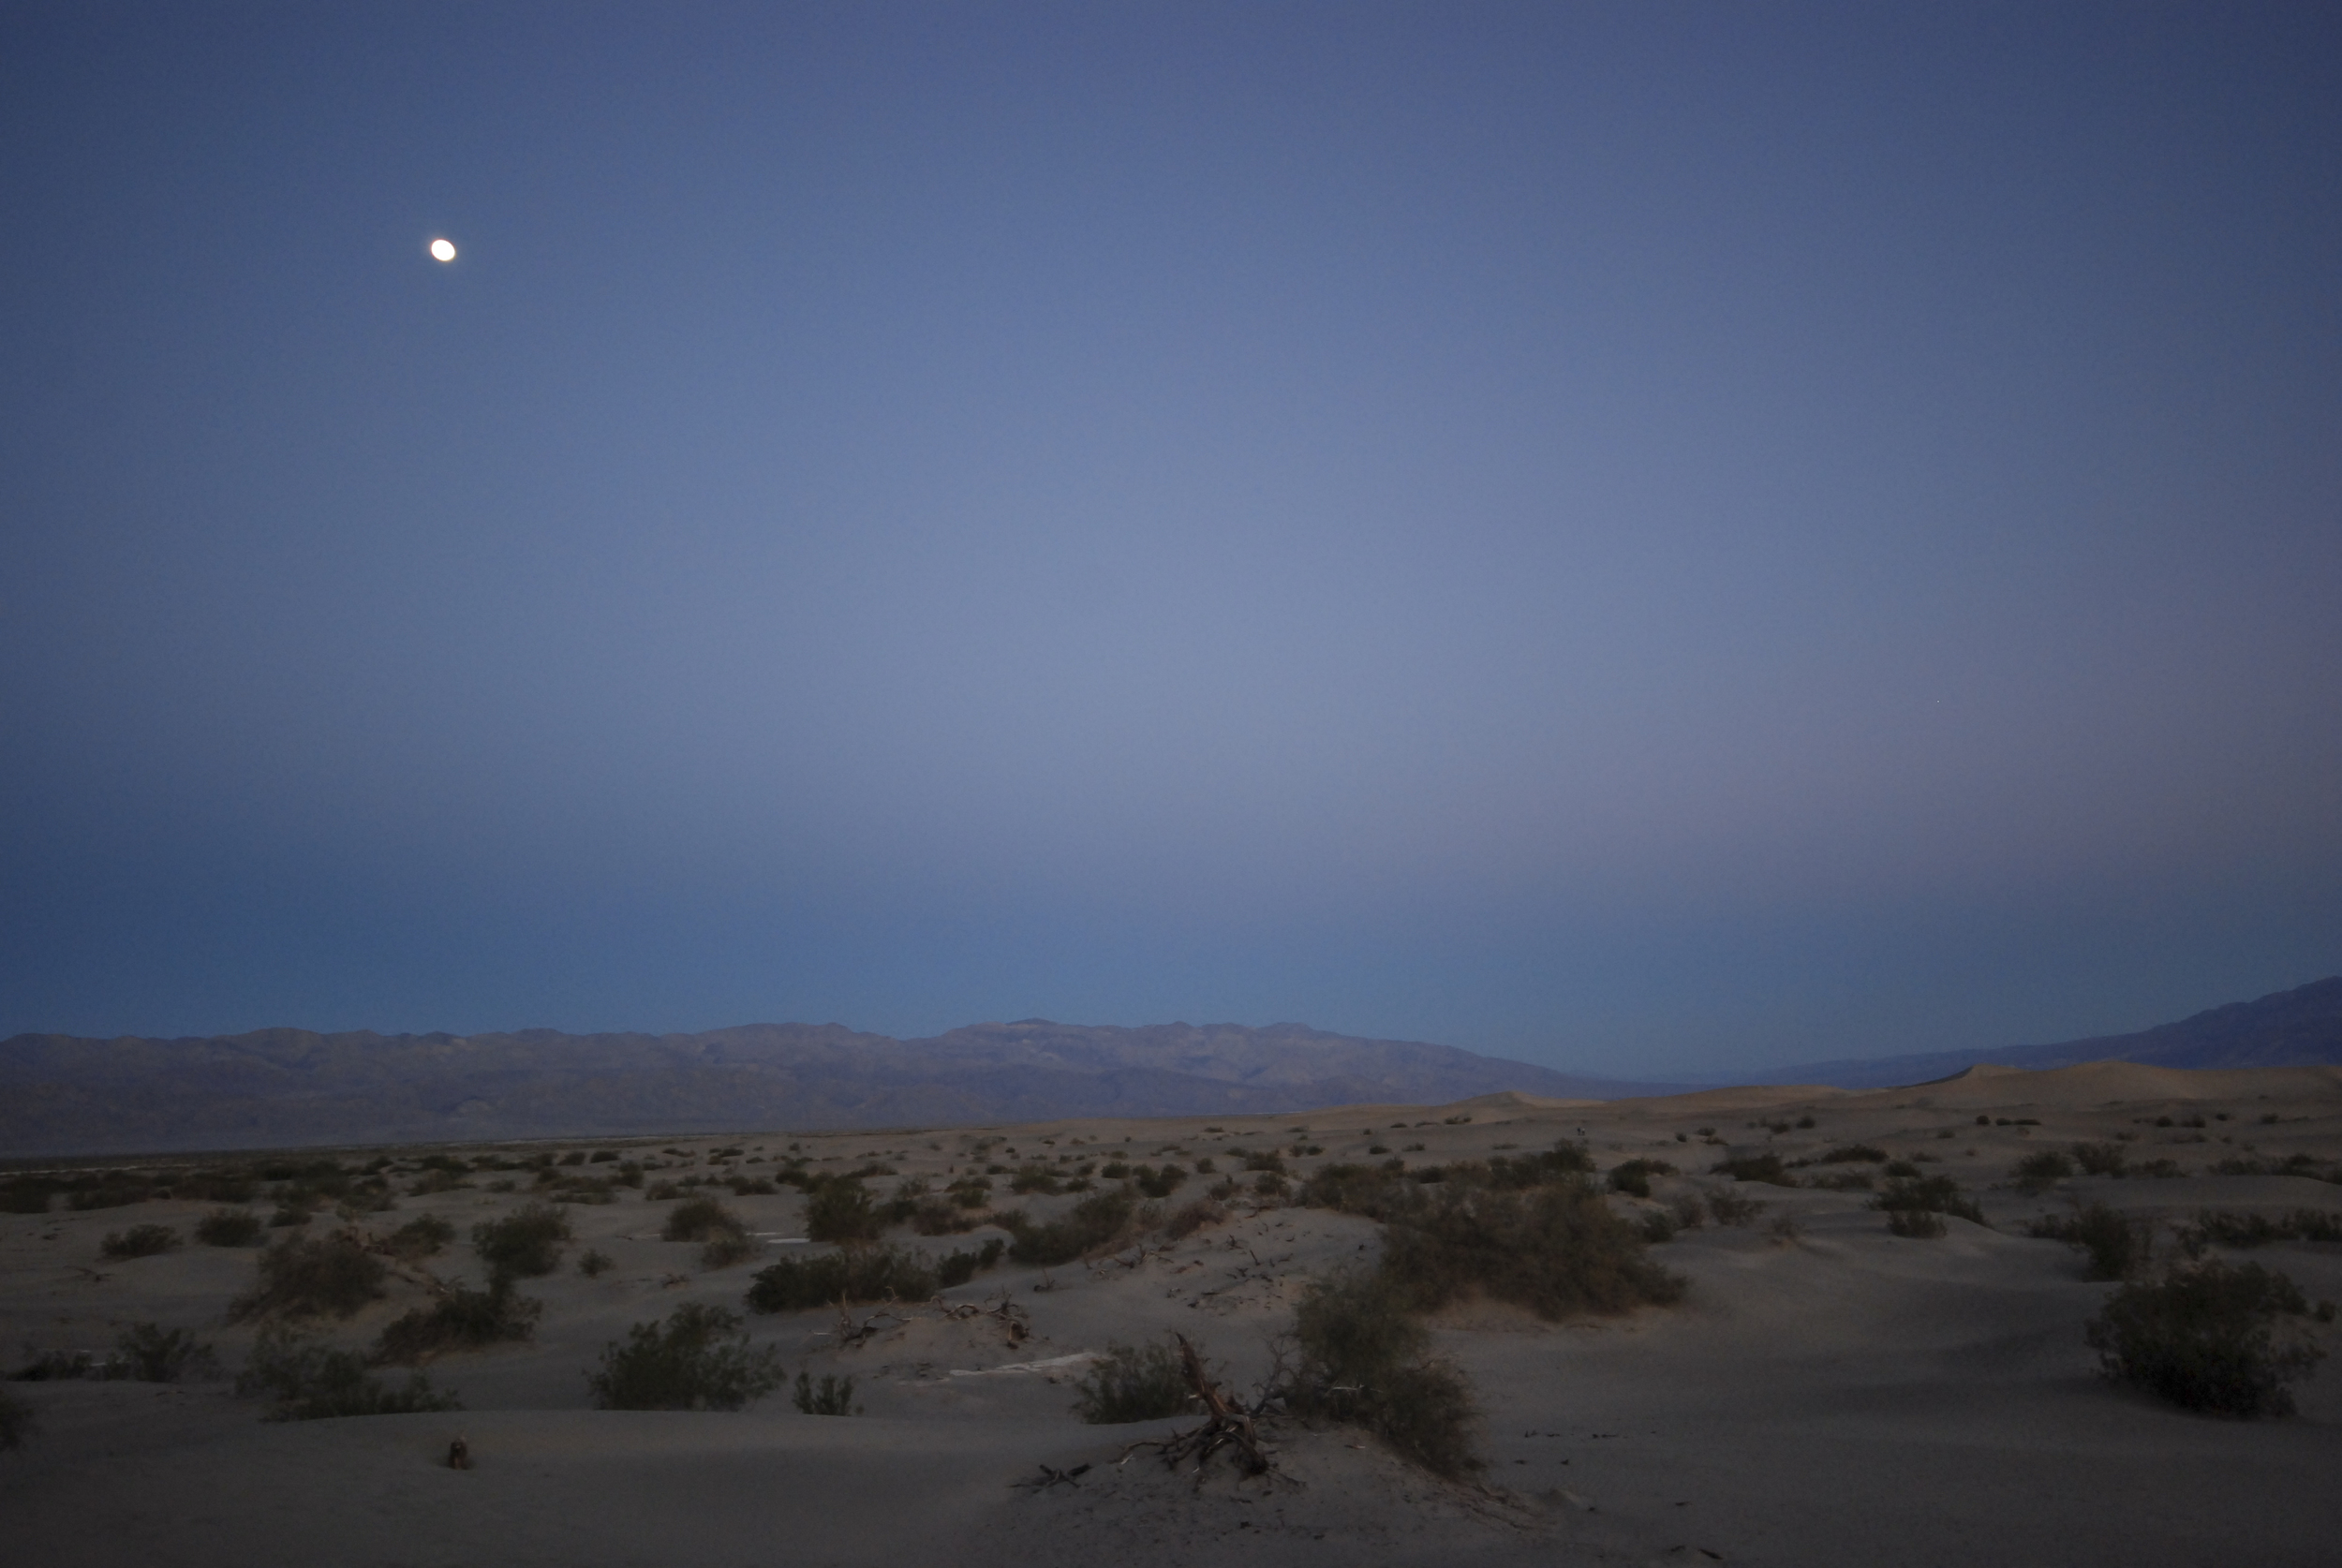 dunes & moon horizontal.jpg